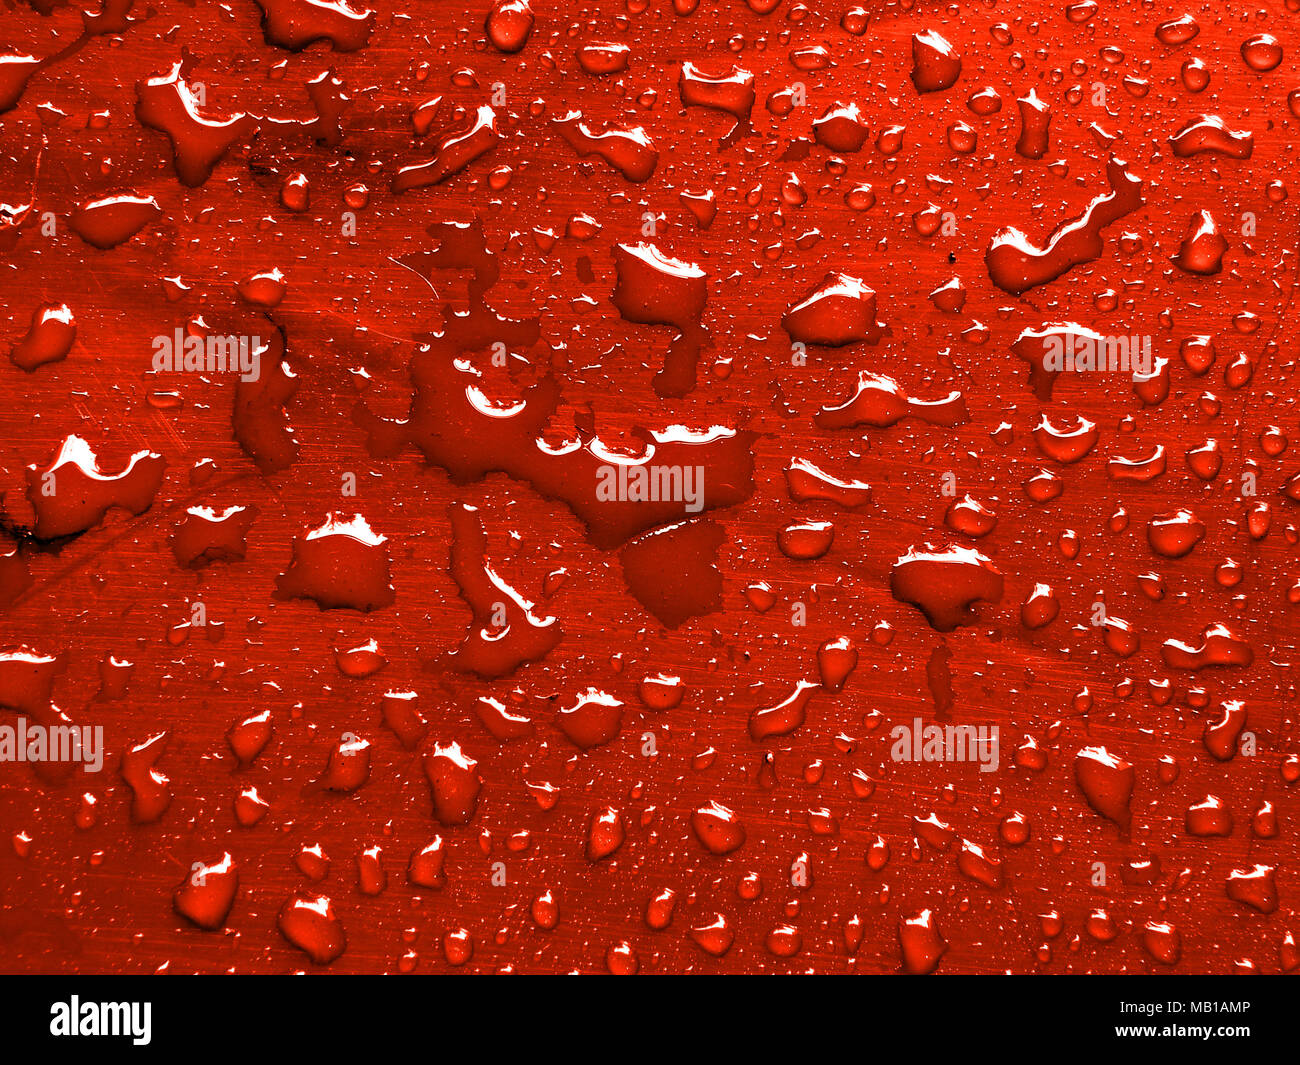 water drops on ferrari red metallic surface Stock Photo